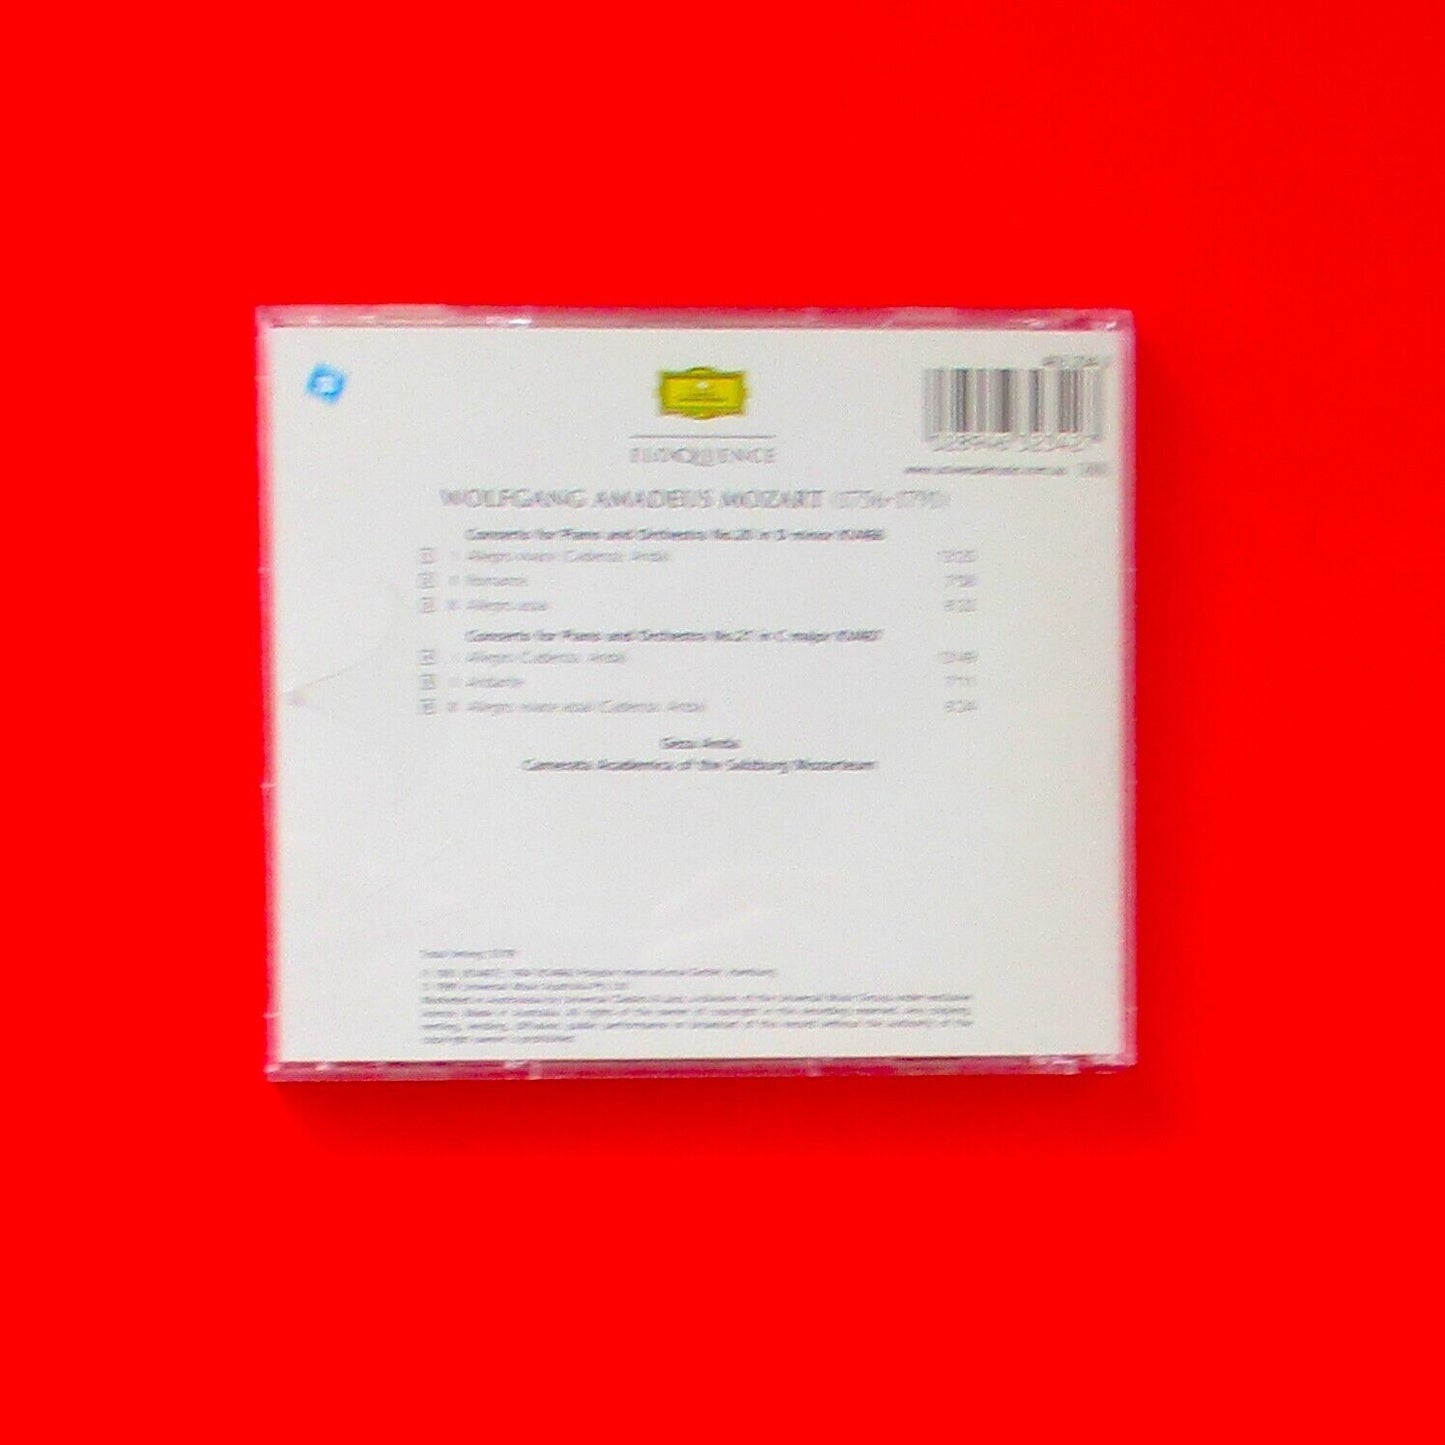 Mozart Piano Concertos Nos. 24 & 25 1999 CD Album SBS Deutsche Grammophon ‎